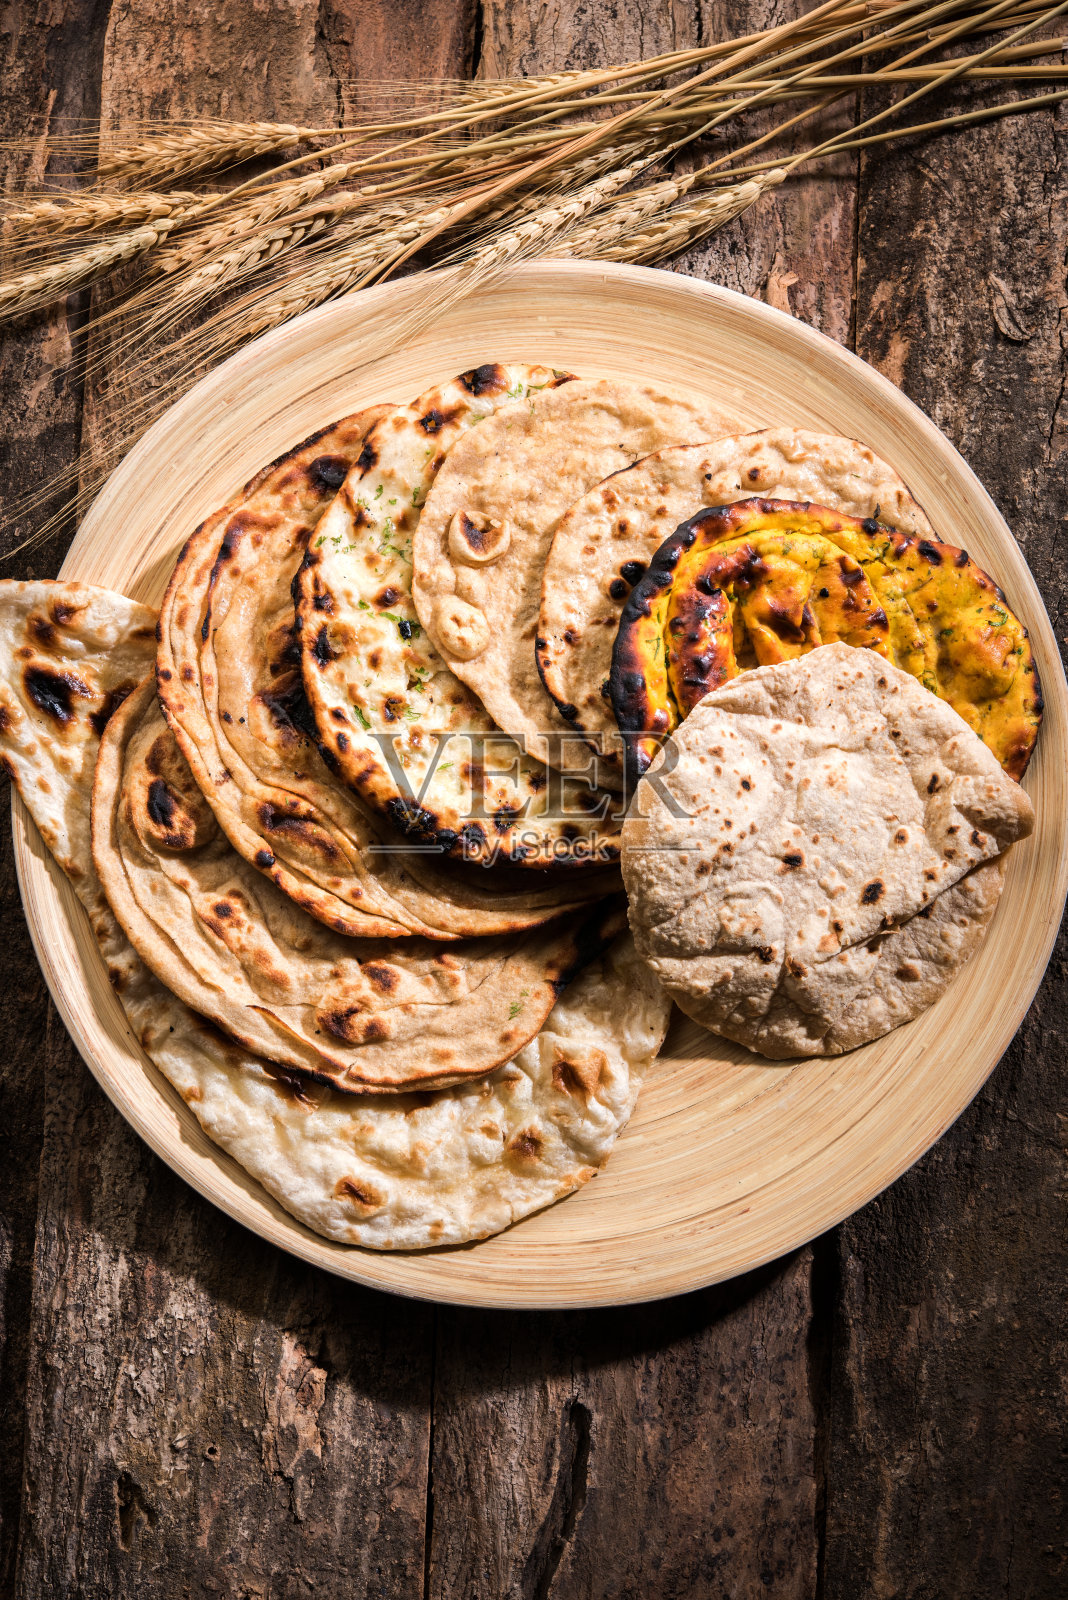 Assorted印度面包包括chapati、tandoori面包、馕饼、paratha、kulcha、fulka、missi面包照片摄影图片